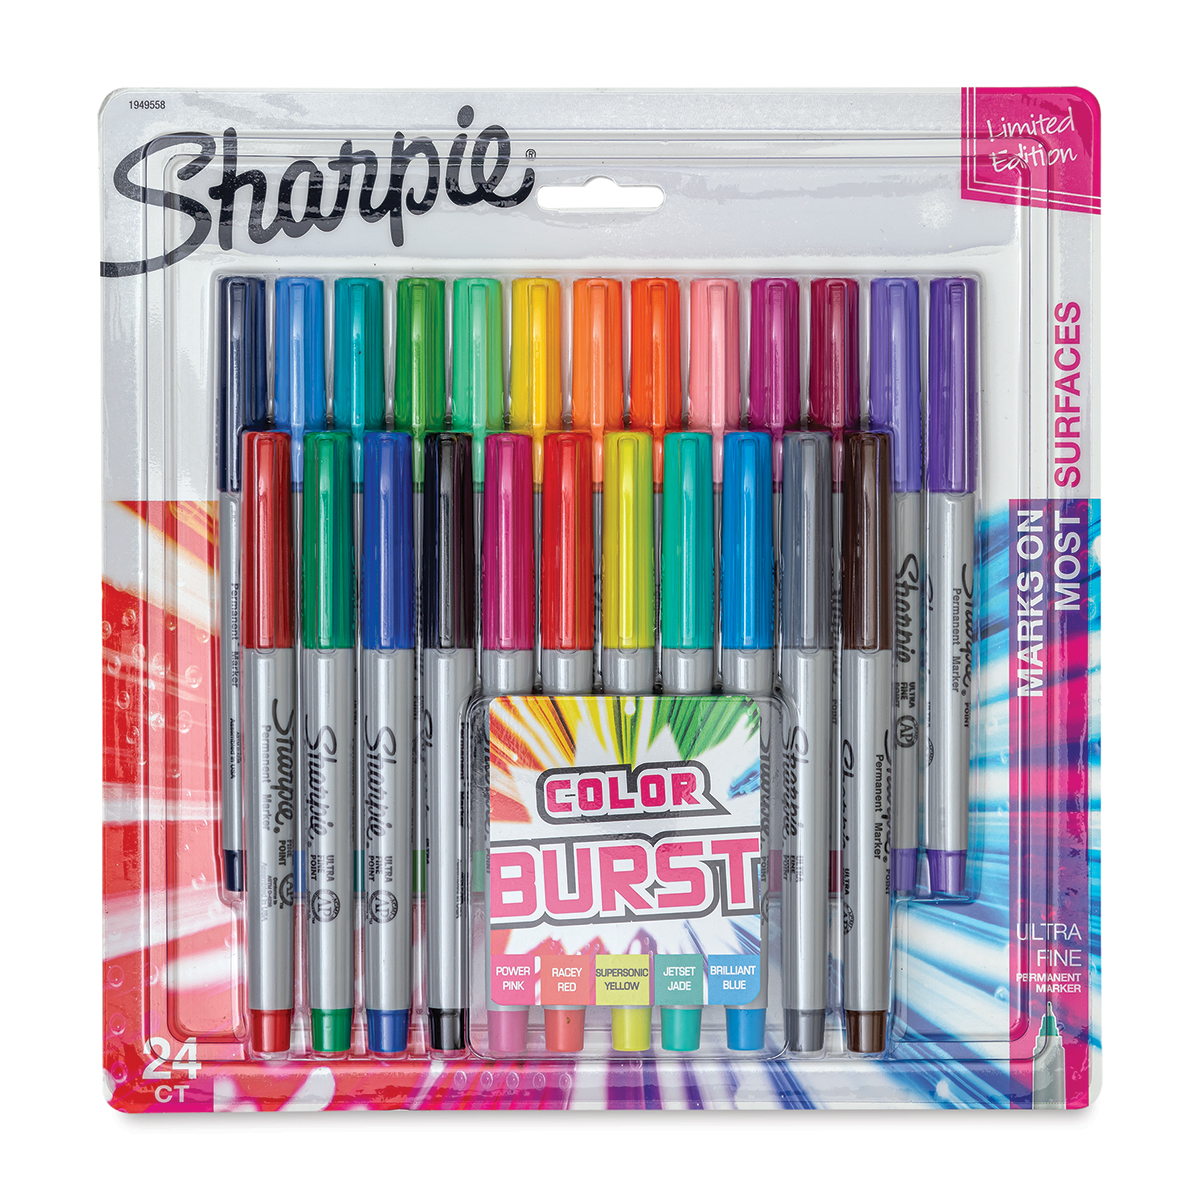 Sharpie Fine Point Permanent Markers - Glam Pop Colors, Set of 24